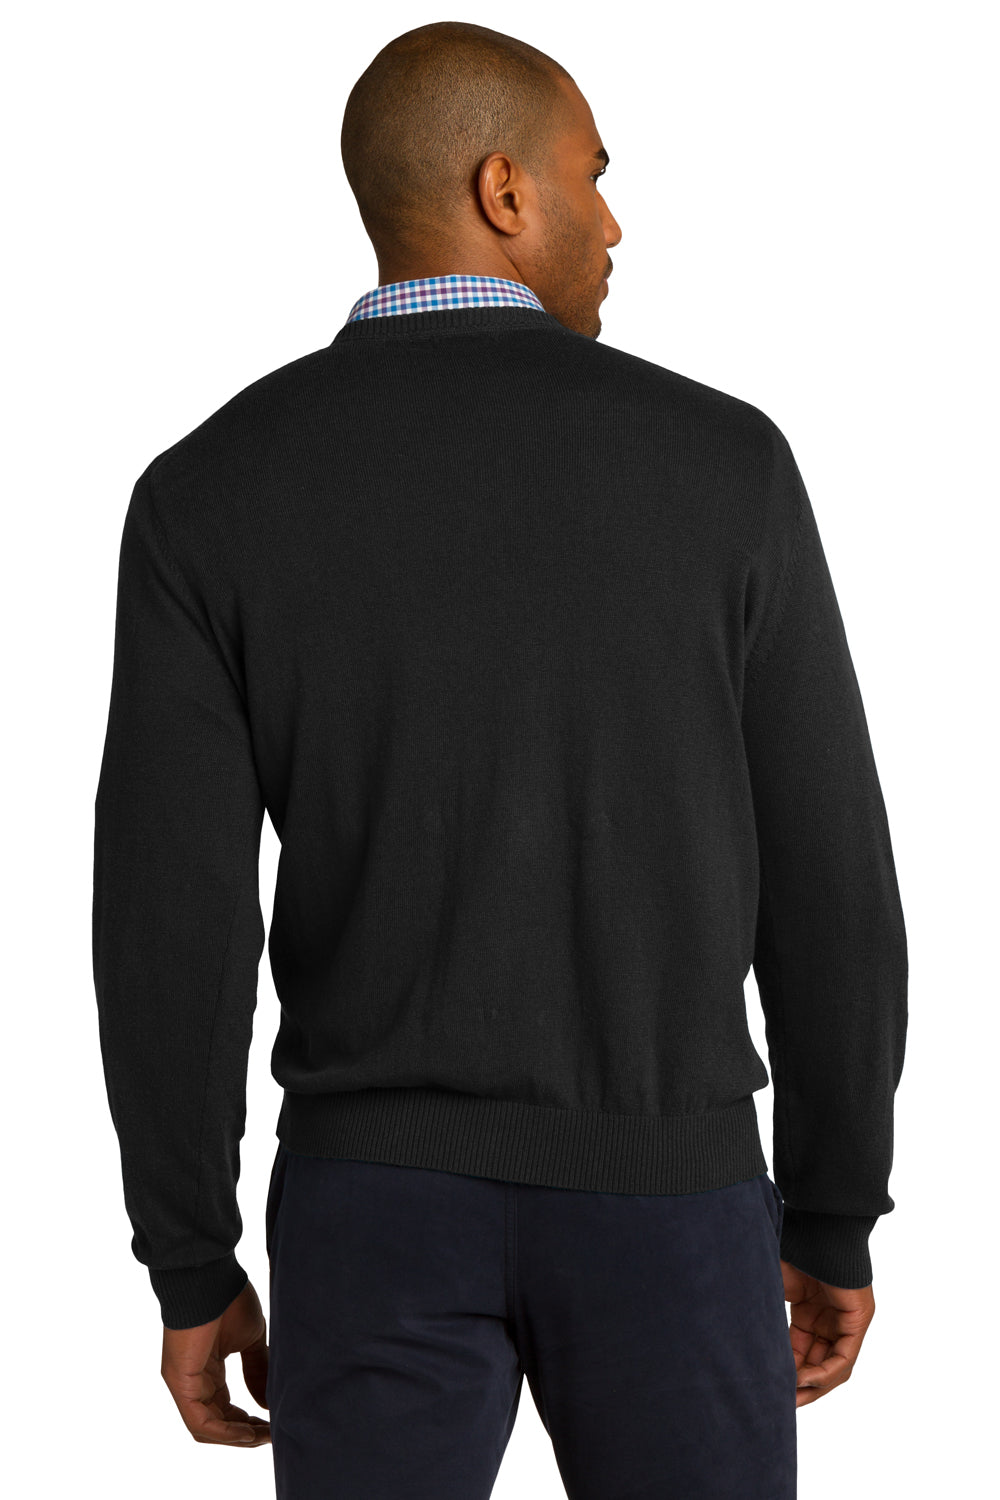 Port Authority SW285 Mens Long Sleeve V-Neck Sweater Black Back